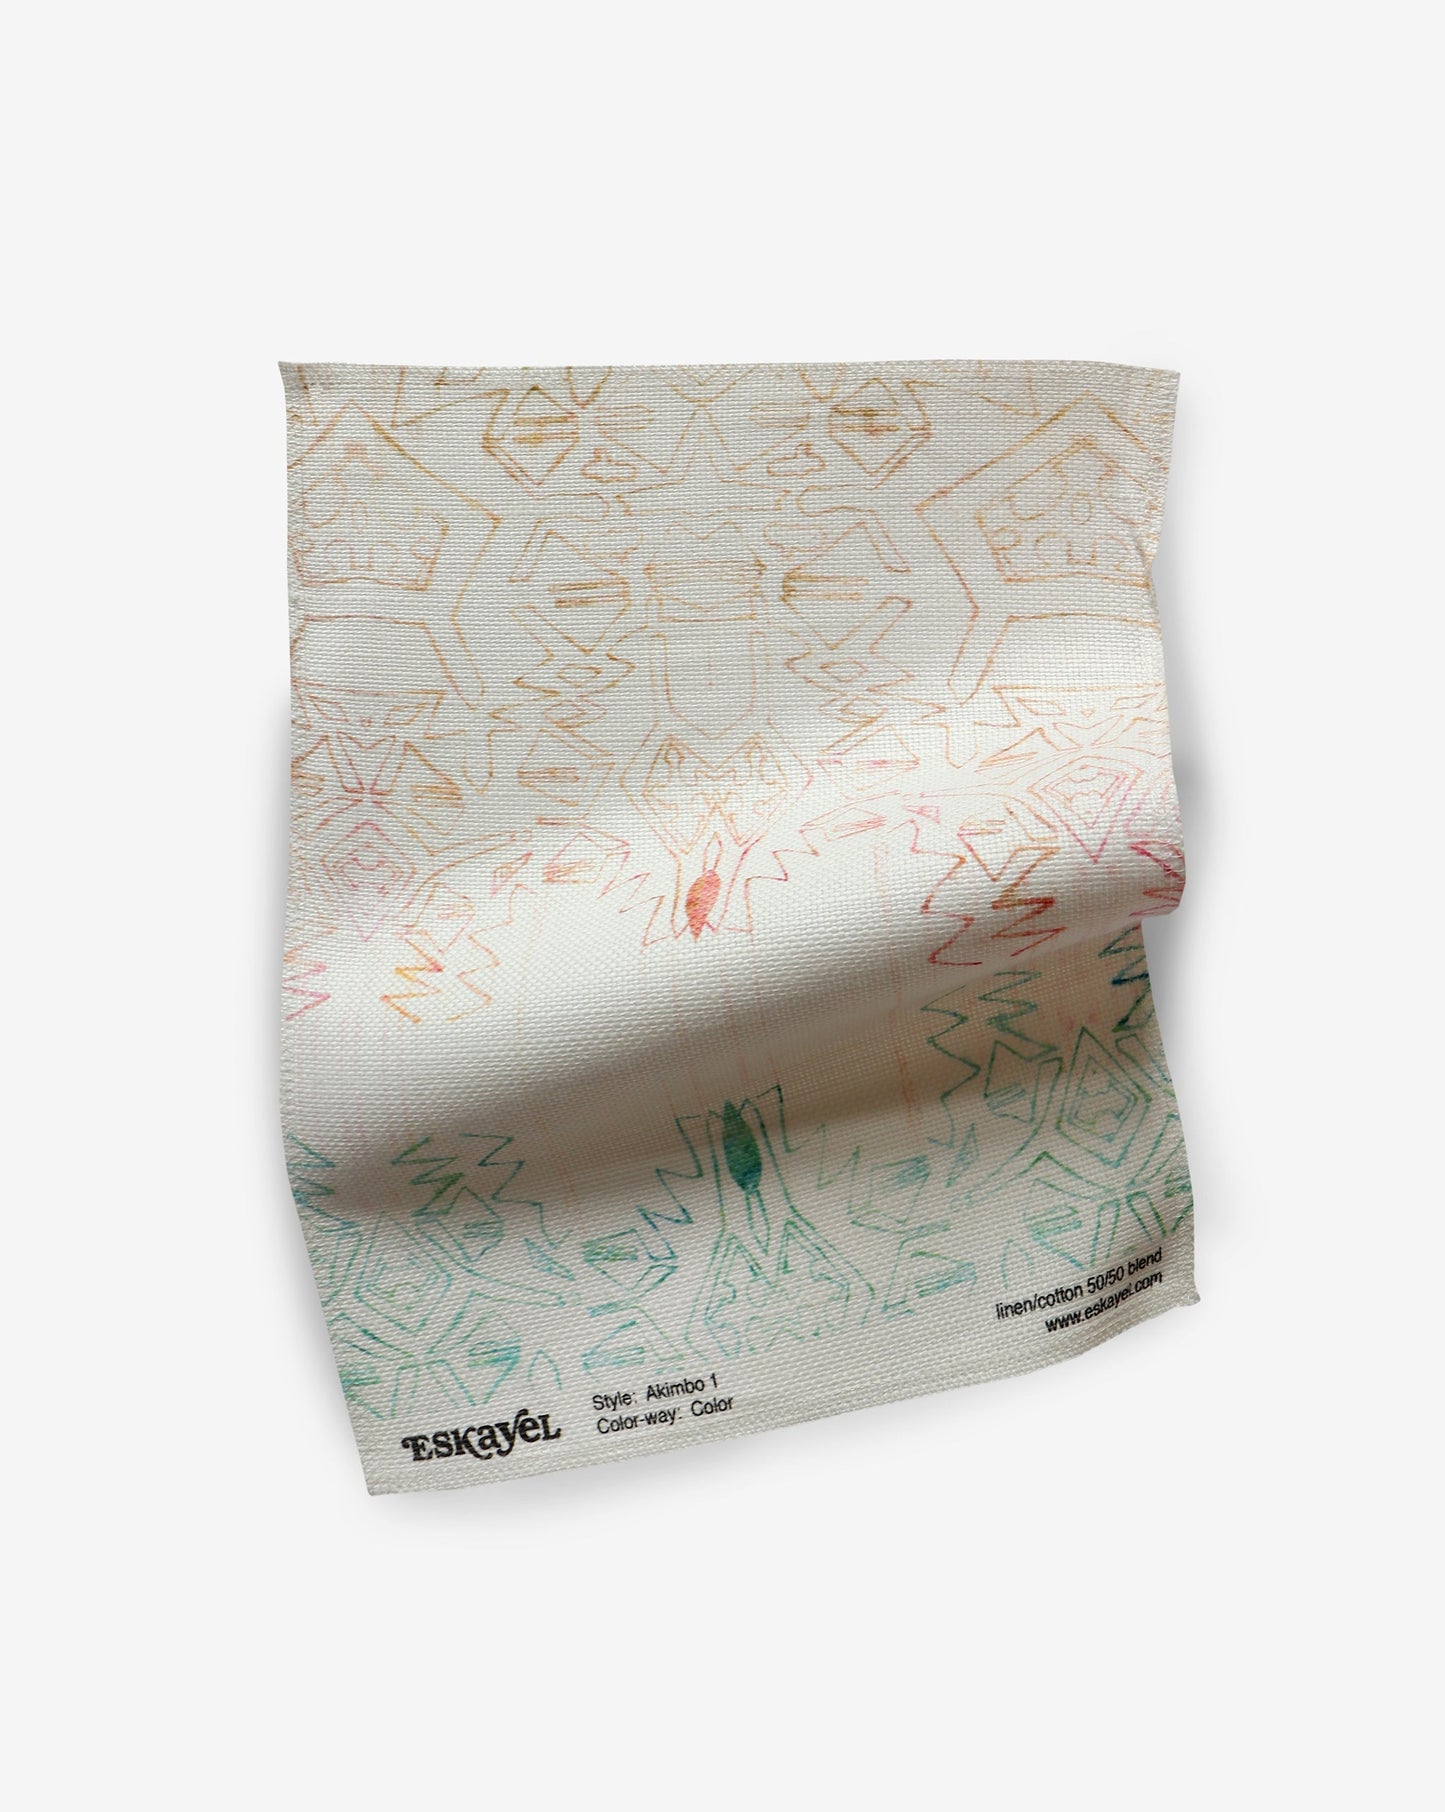 Akimbo 1 Fabric Sample||Color